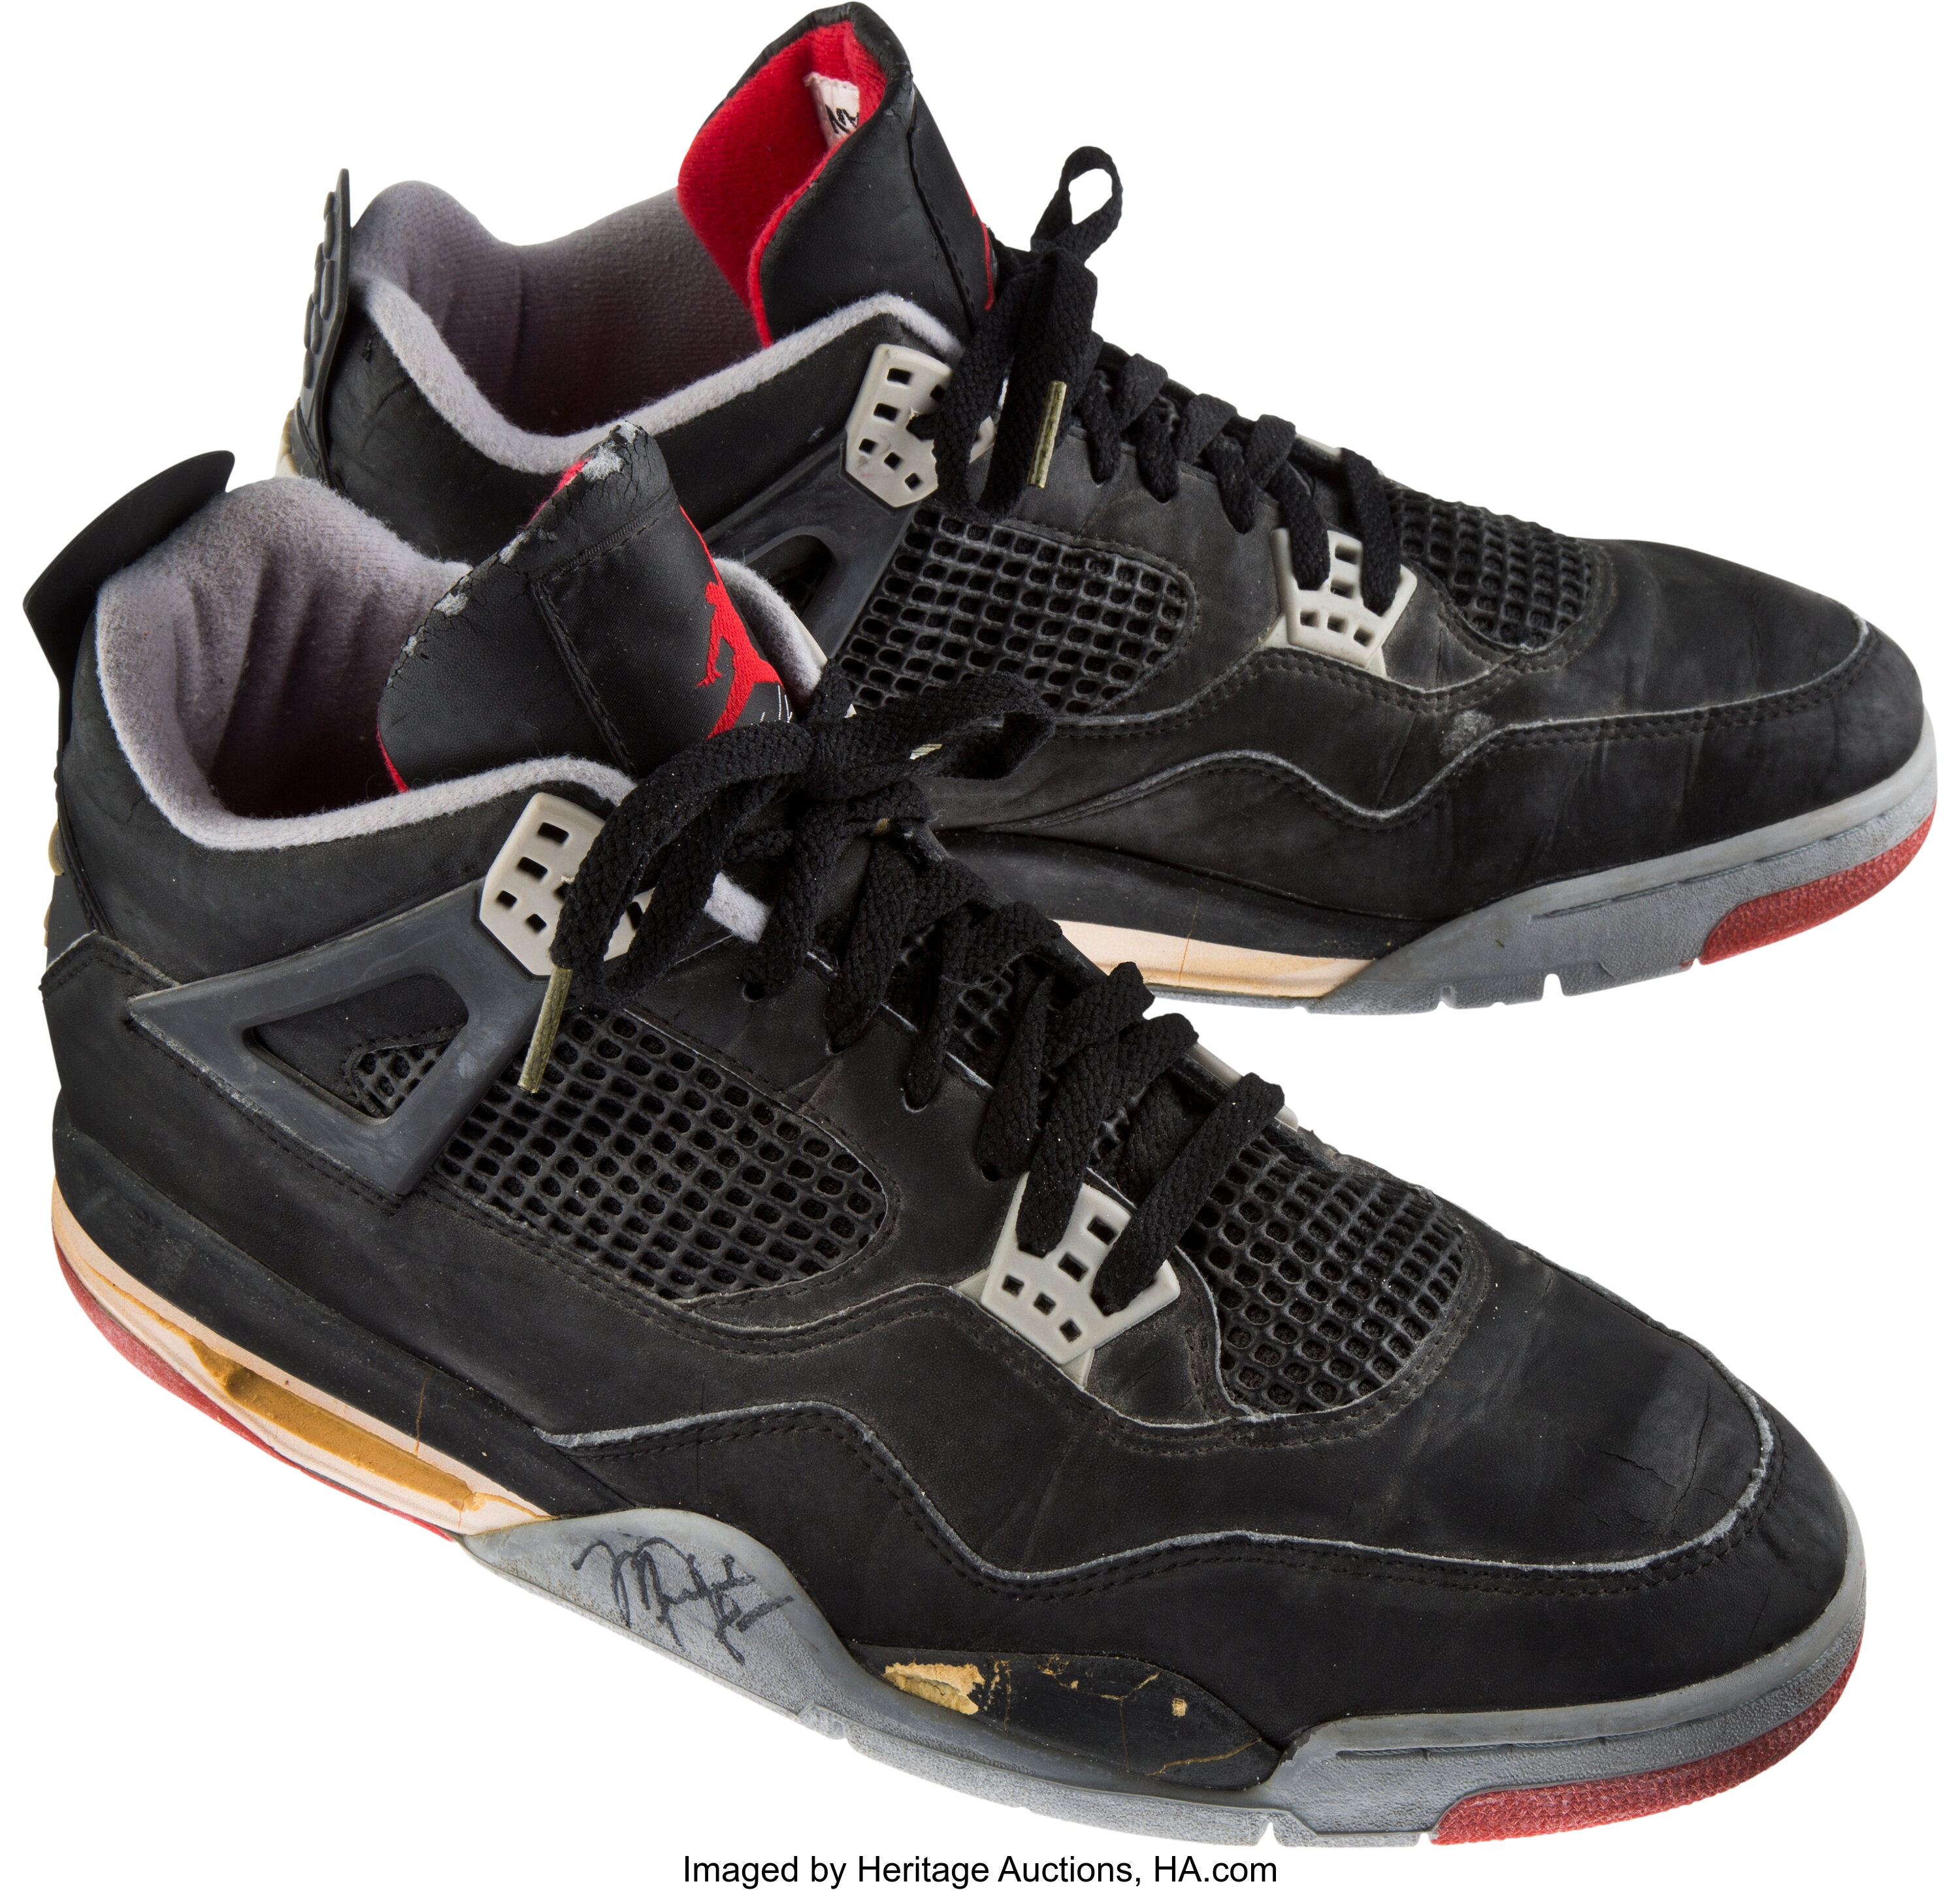 1988-89 Michael Jordan Game Worn, Signed Air Jordan IV Shoes.... Lot #80484 Heritage Auctions